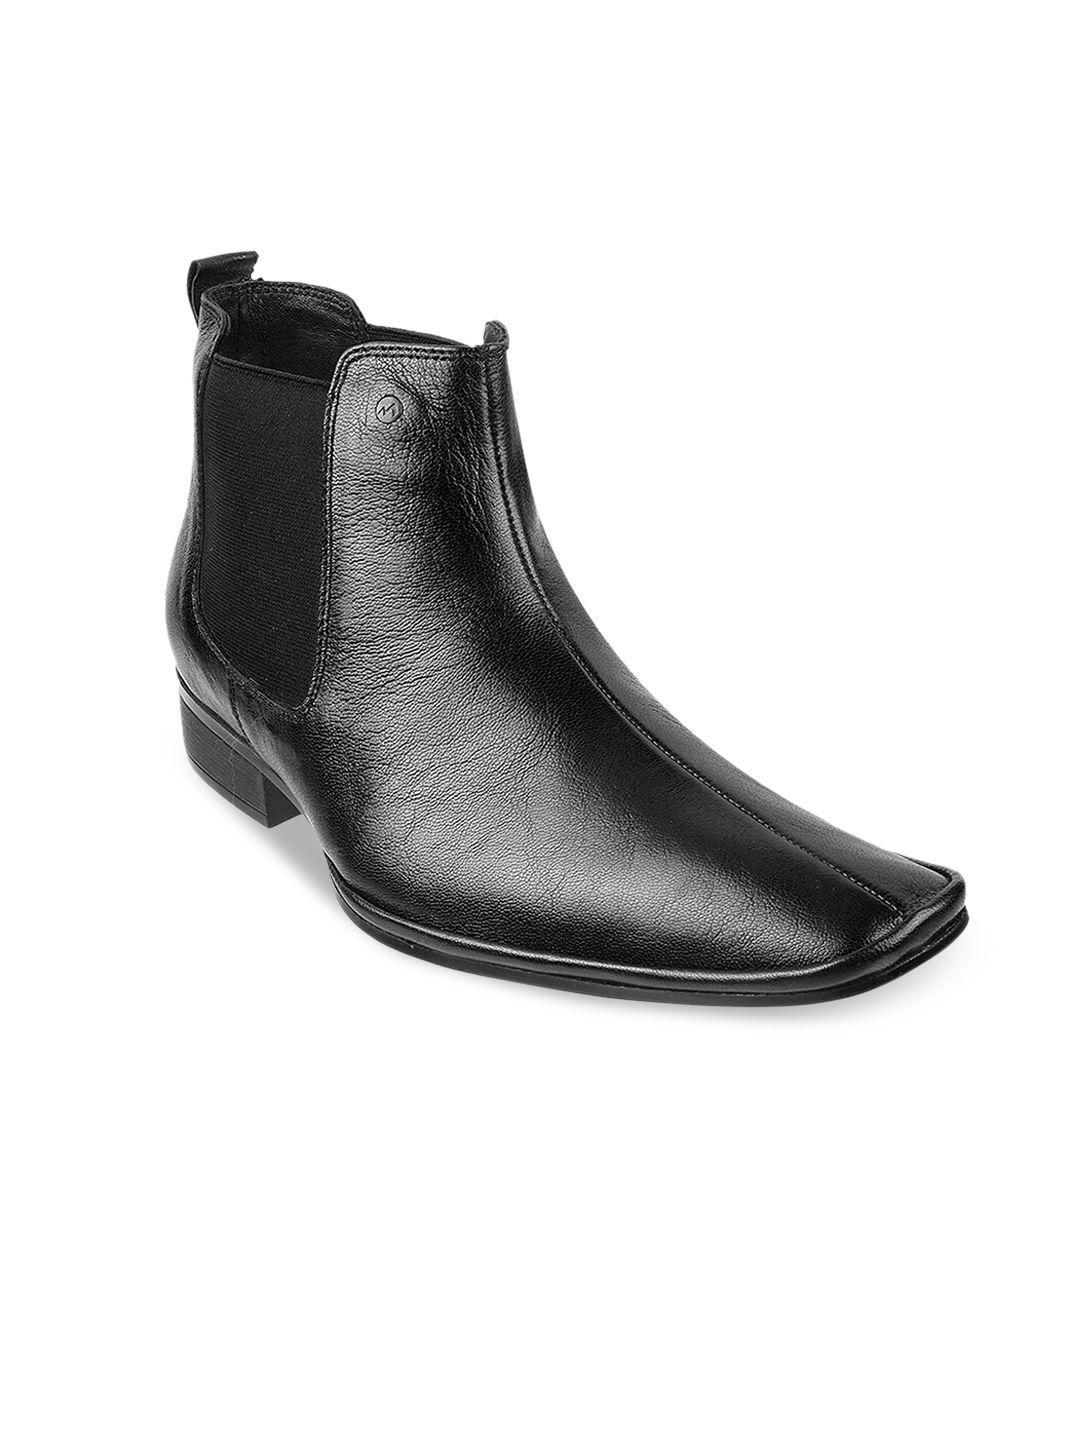 metro men black textured leather formal slip on boots